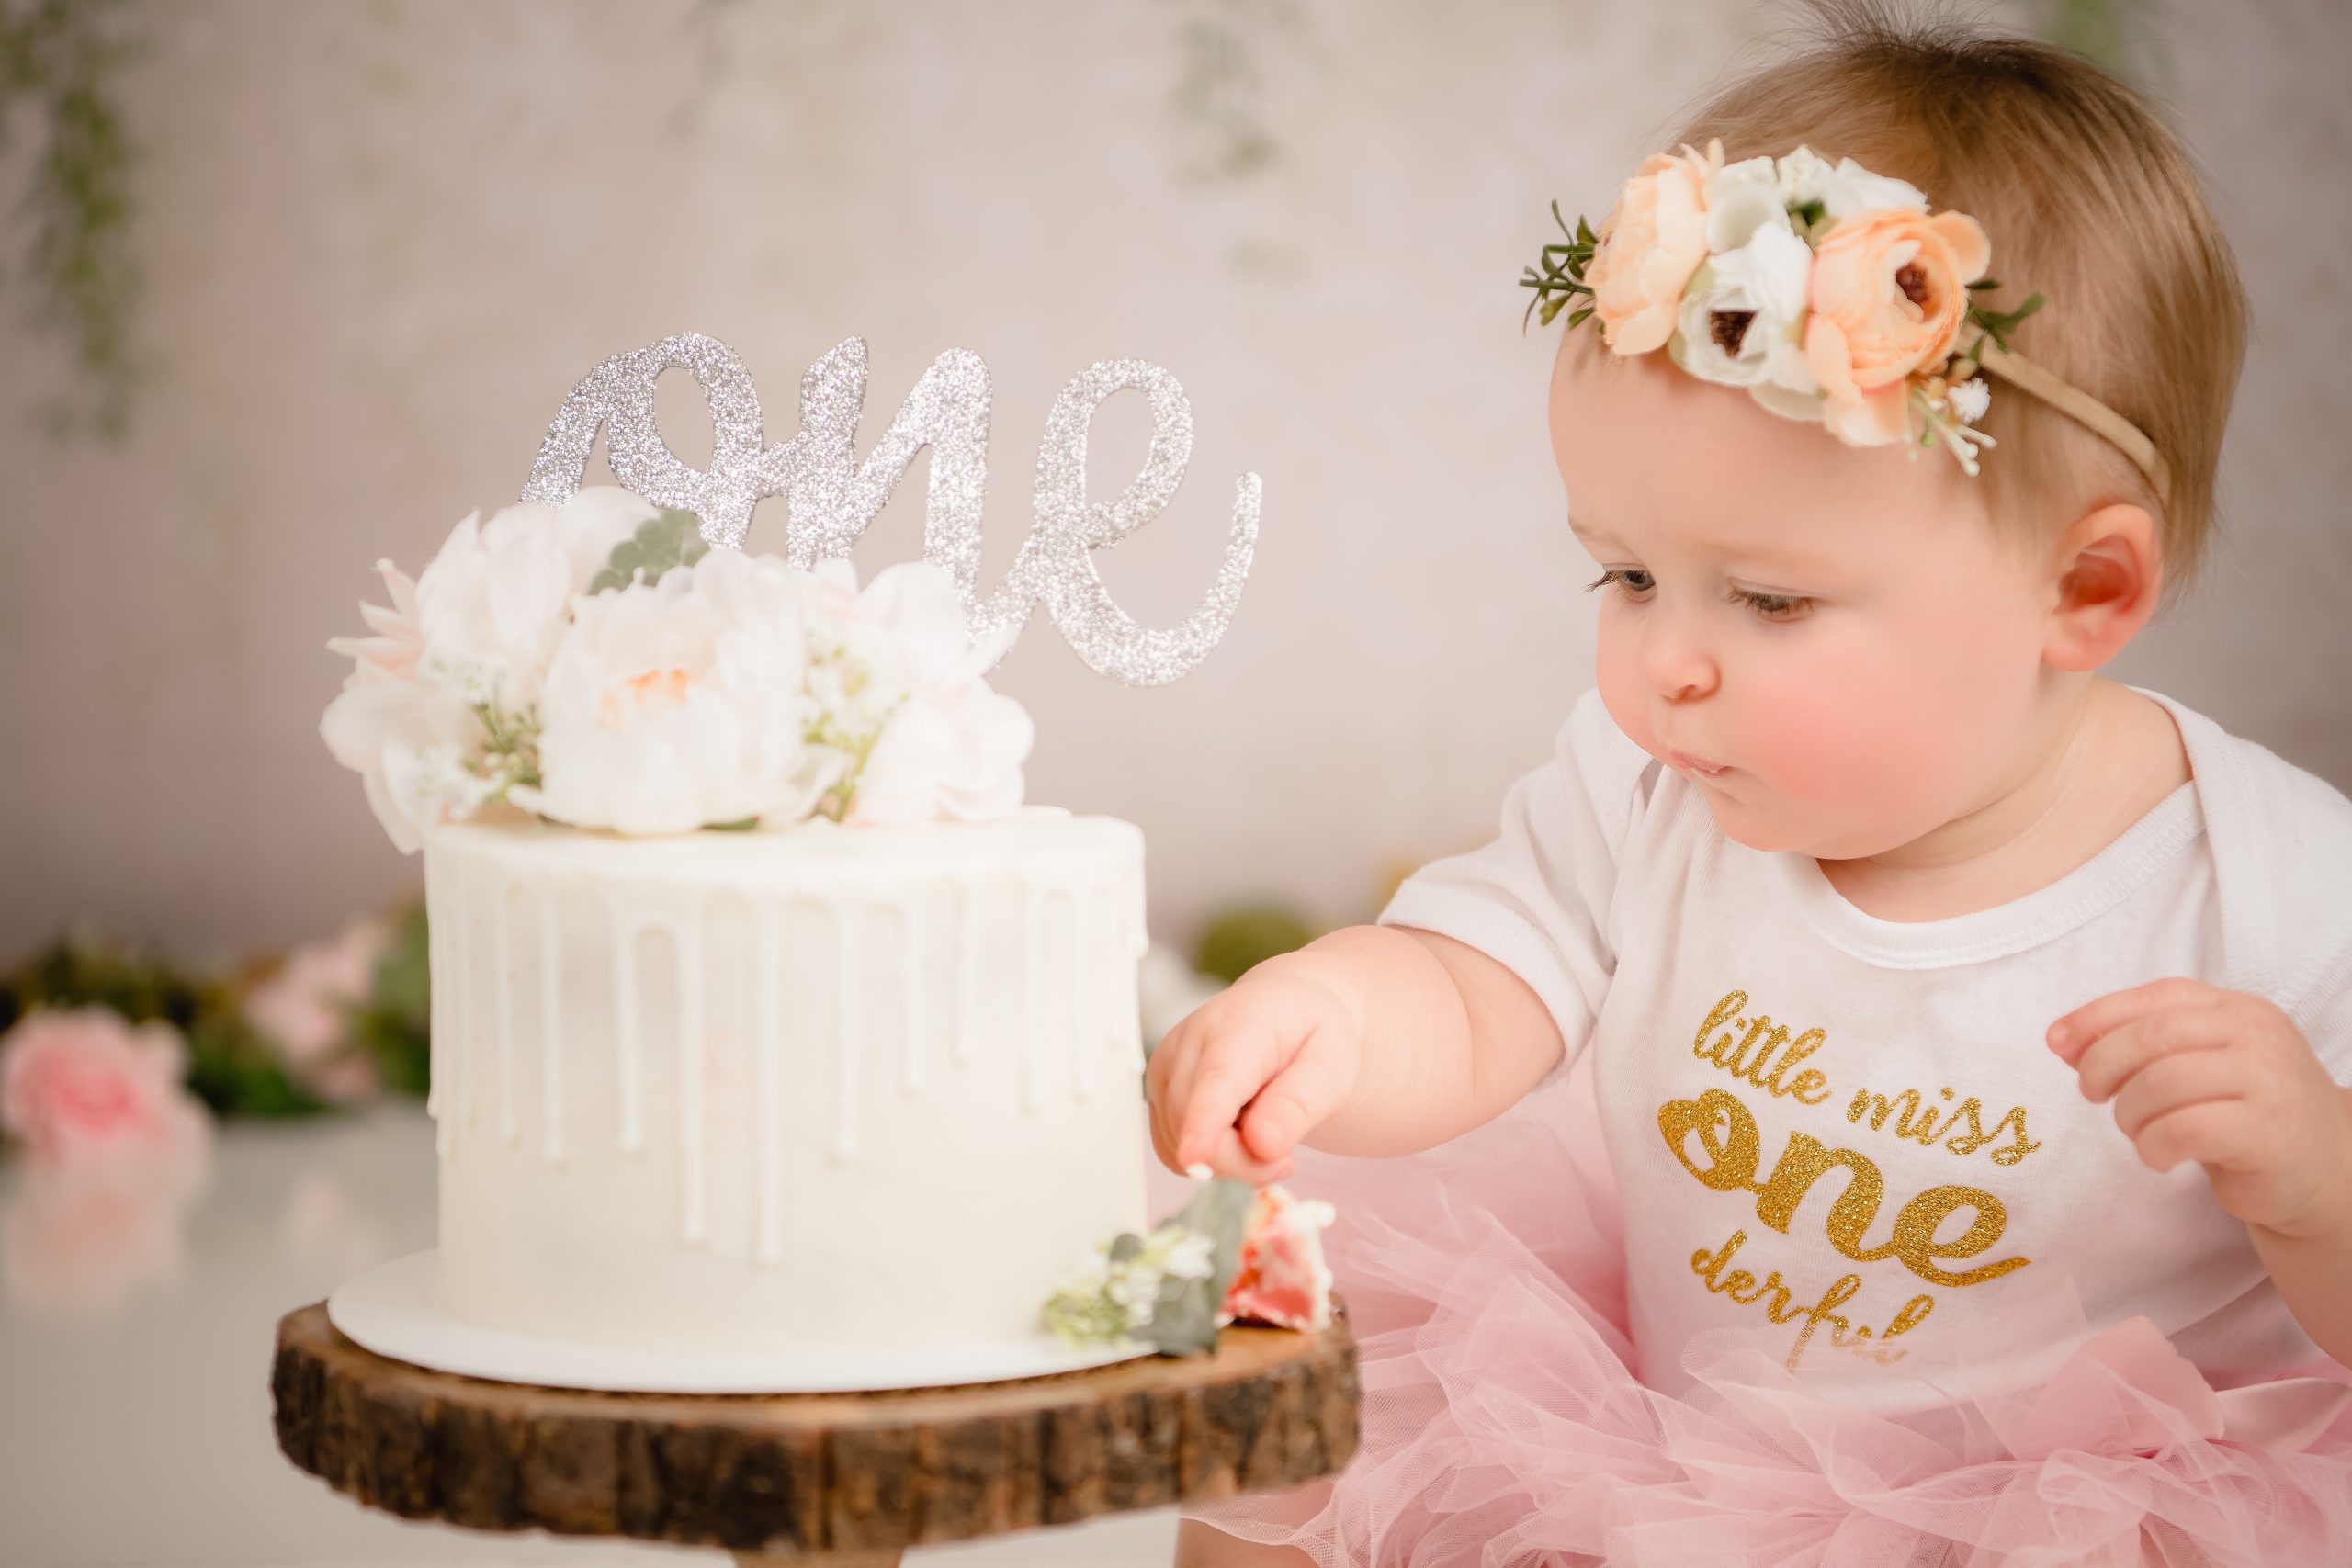 Katie McMann Cake Smash 1003 scaled - Cake Smash - 1st Birthday